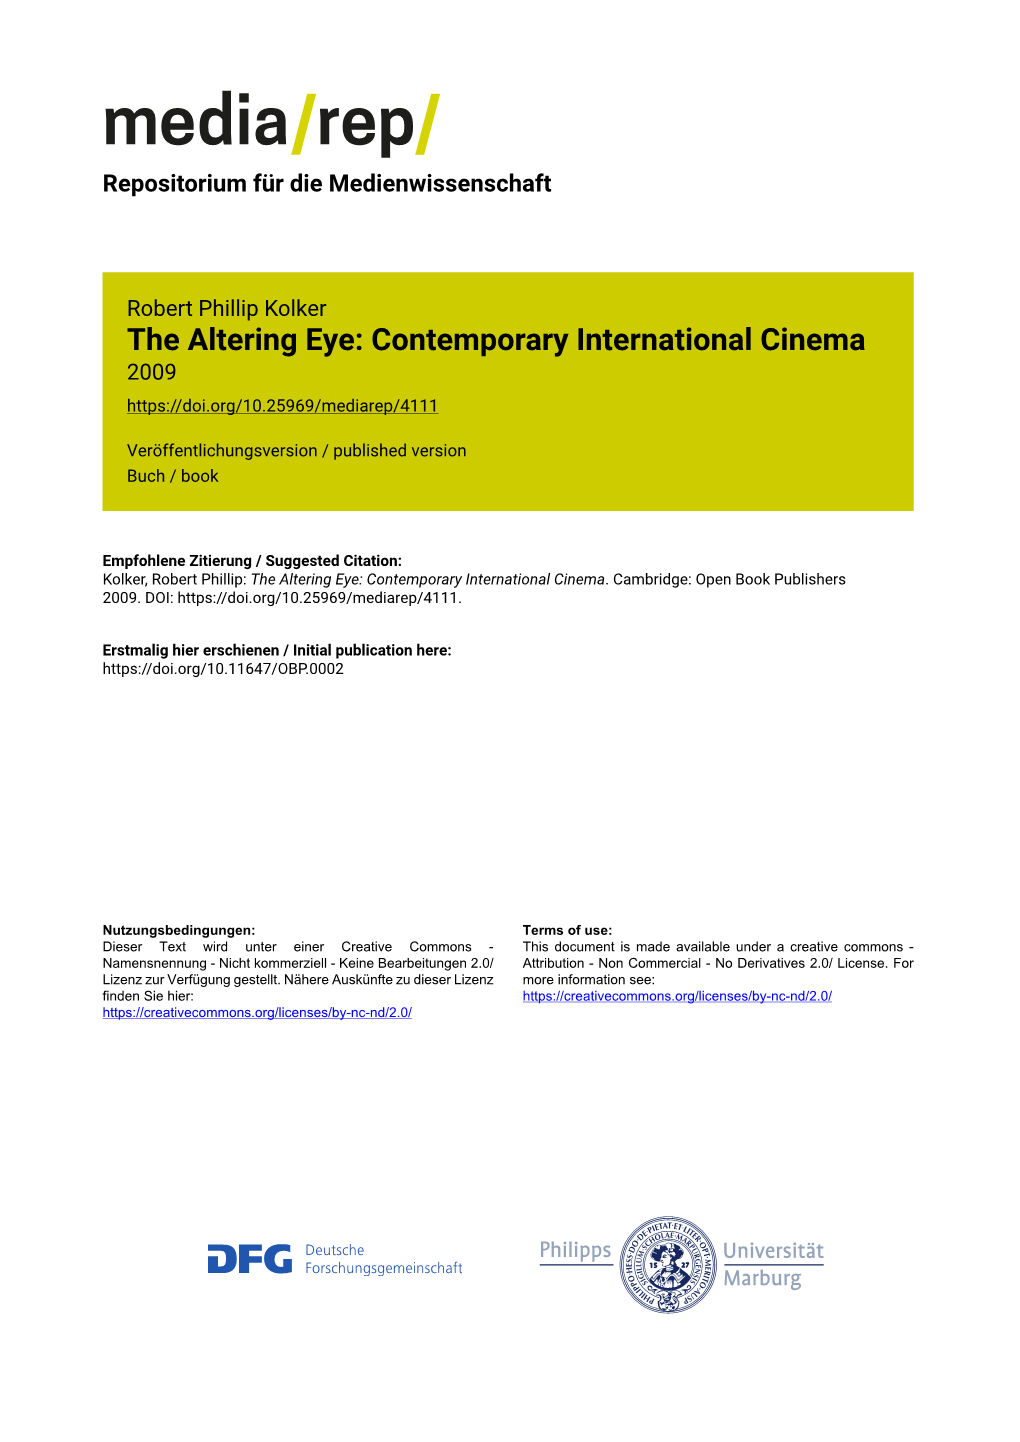 The Altering Eye: Contemporary International Cinema 2009